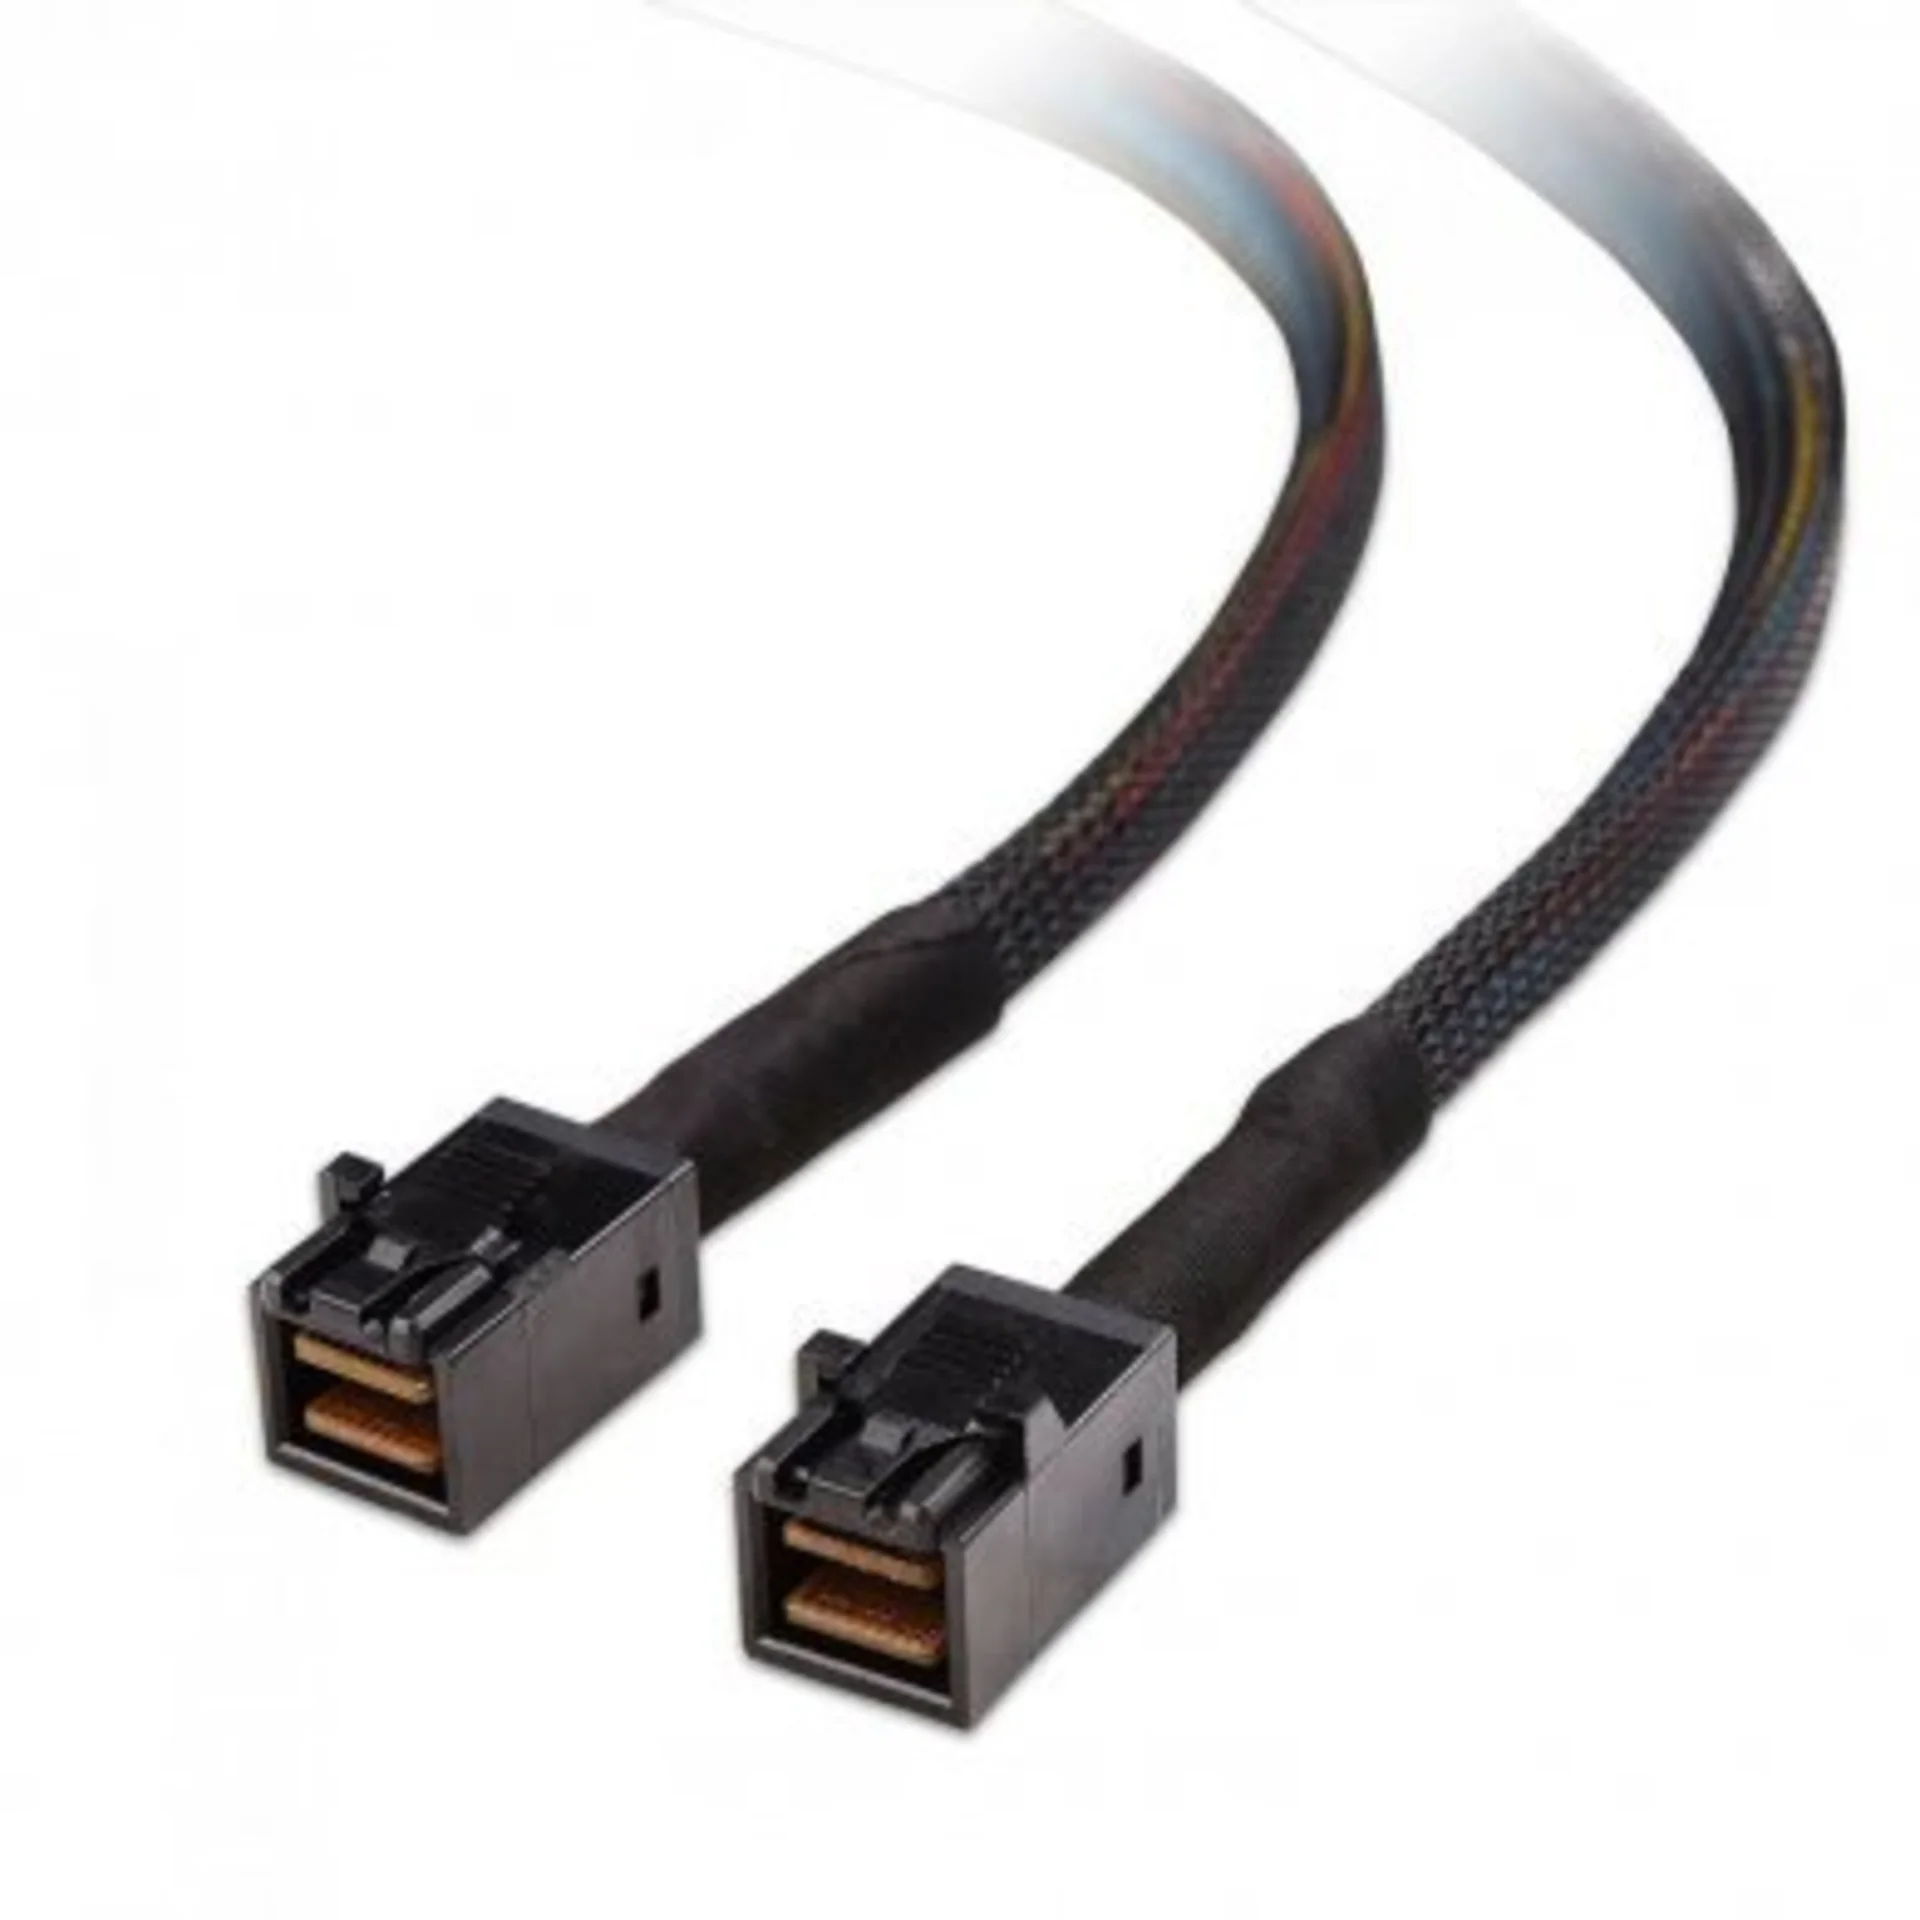 Кабель Amphenol CEACENT 8643 TO 8643 80cm (HD8643-8643-12G-0.8M) SFF8643-SFF8643 ( HDmSAS -to- HDmSAS internal cable w/SideBand) 80cm